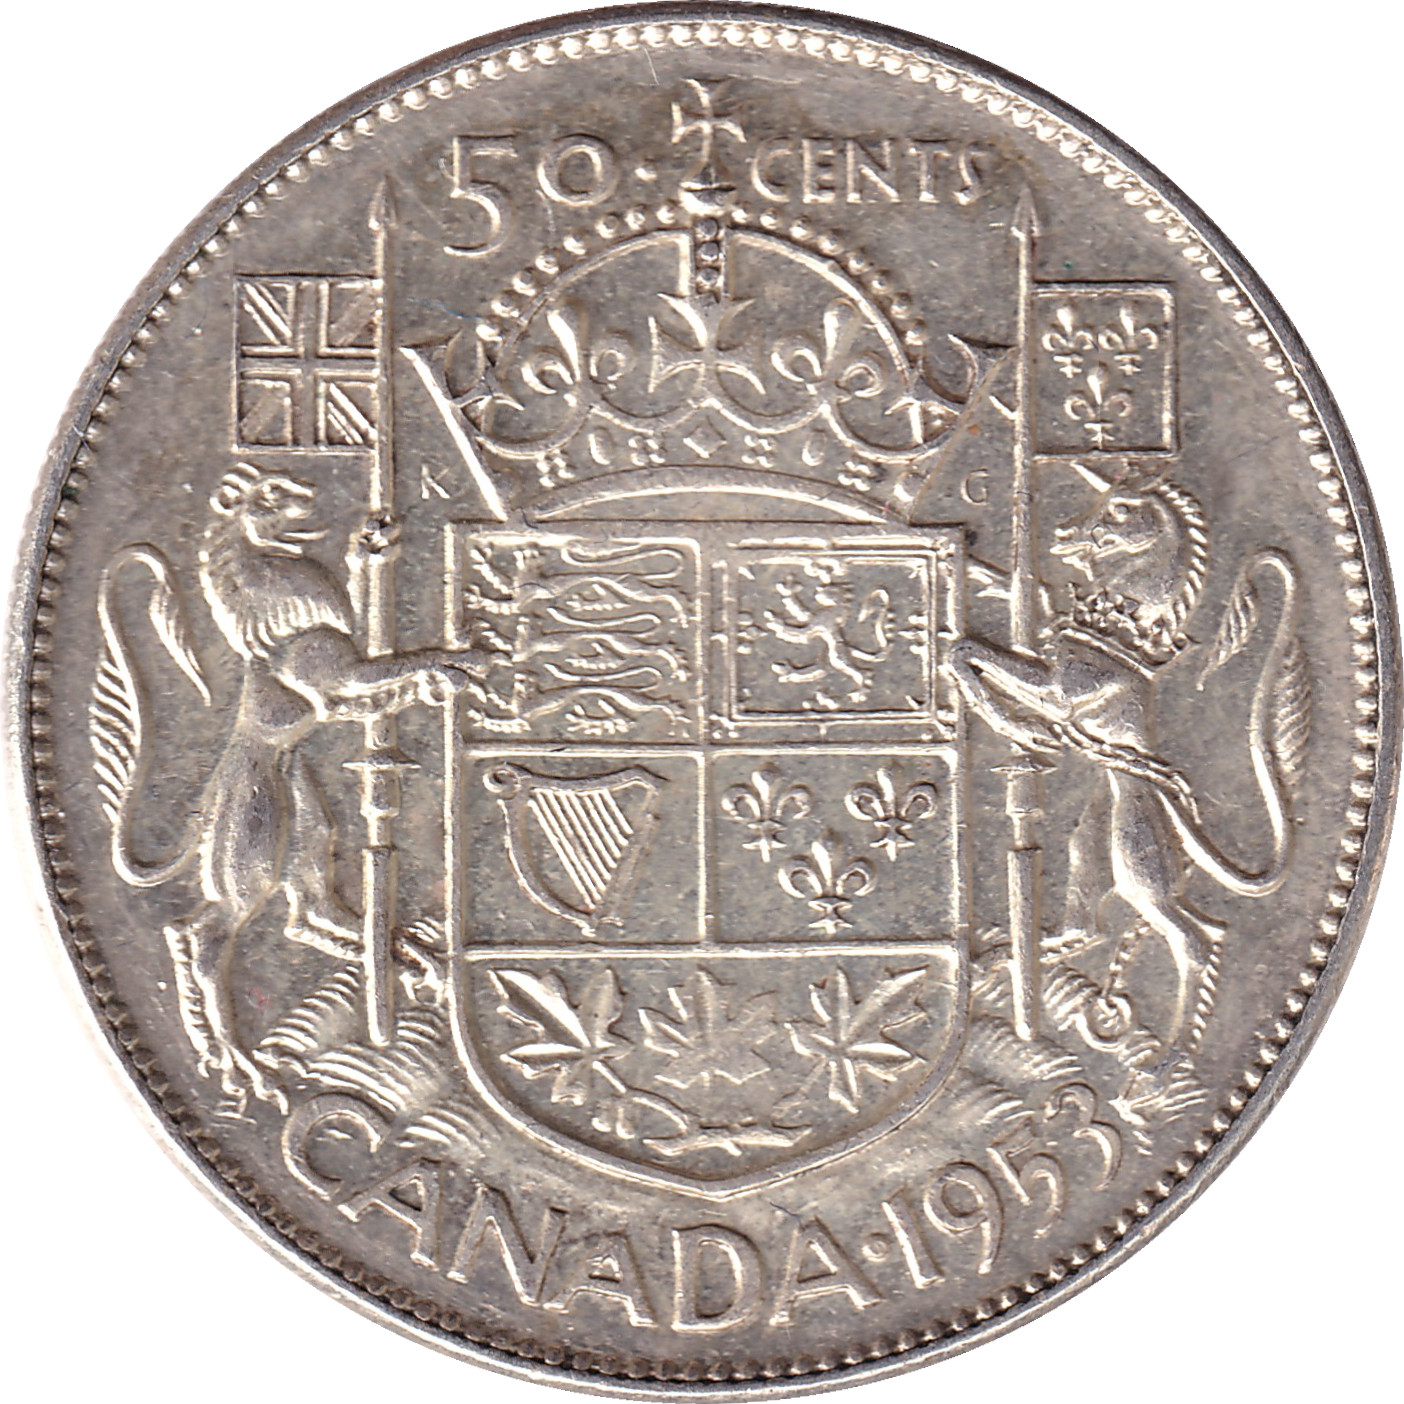 50 cents - Elizabeth II - Buste jeune - Grandes armoiries